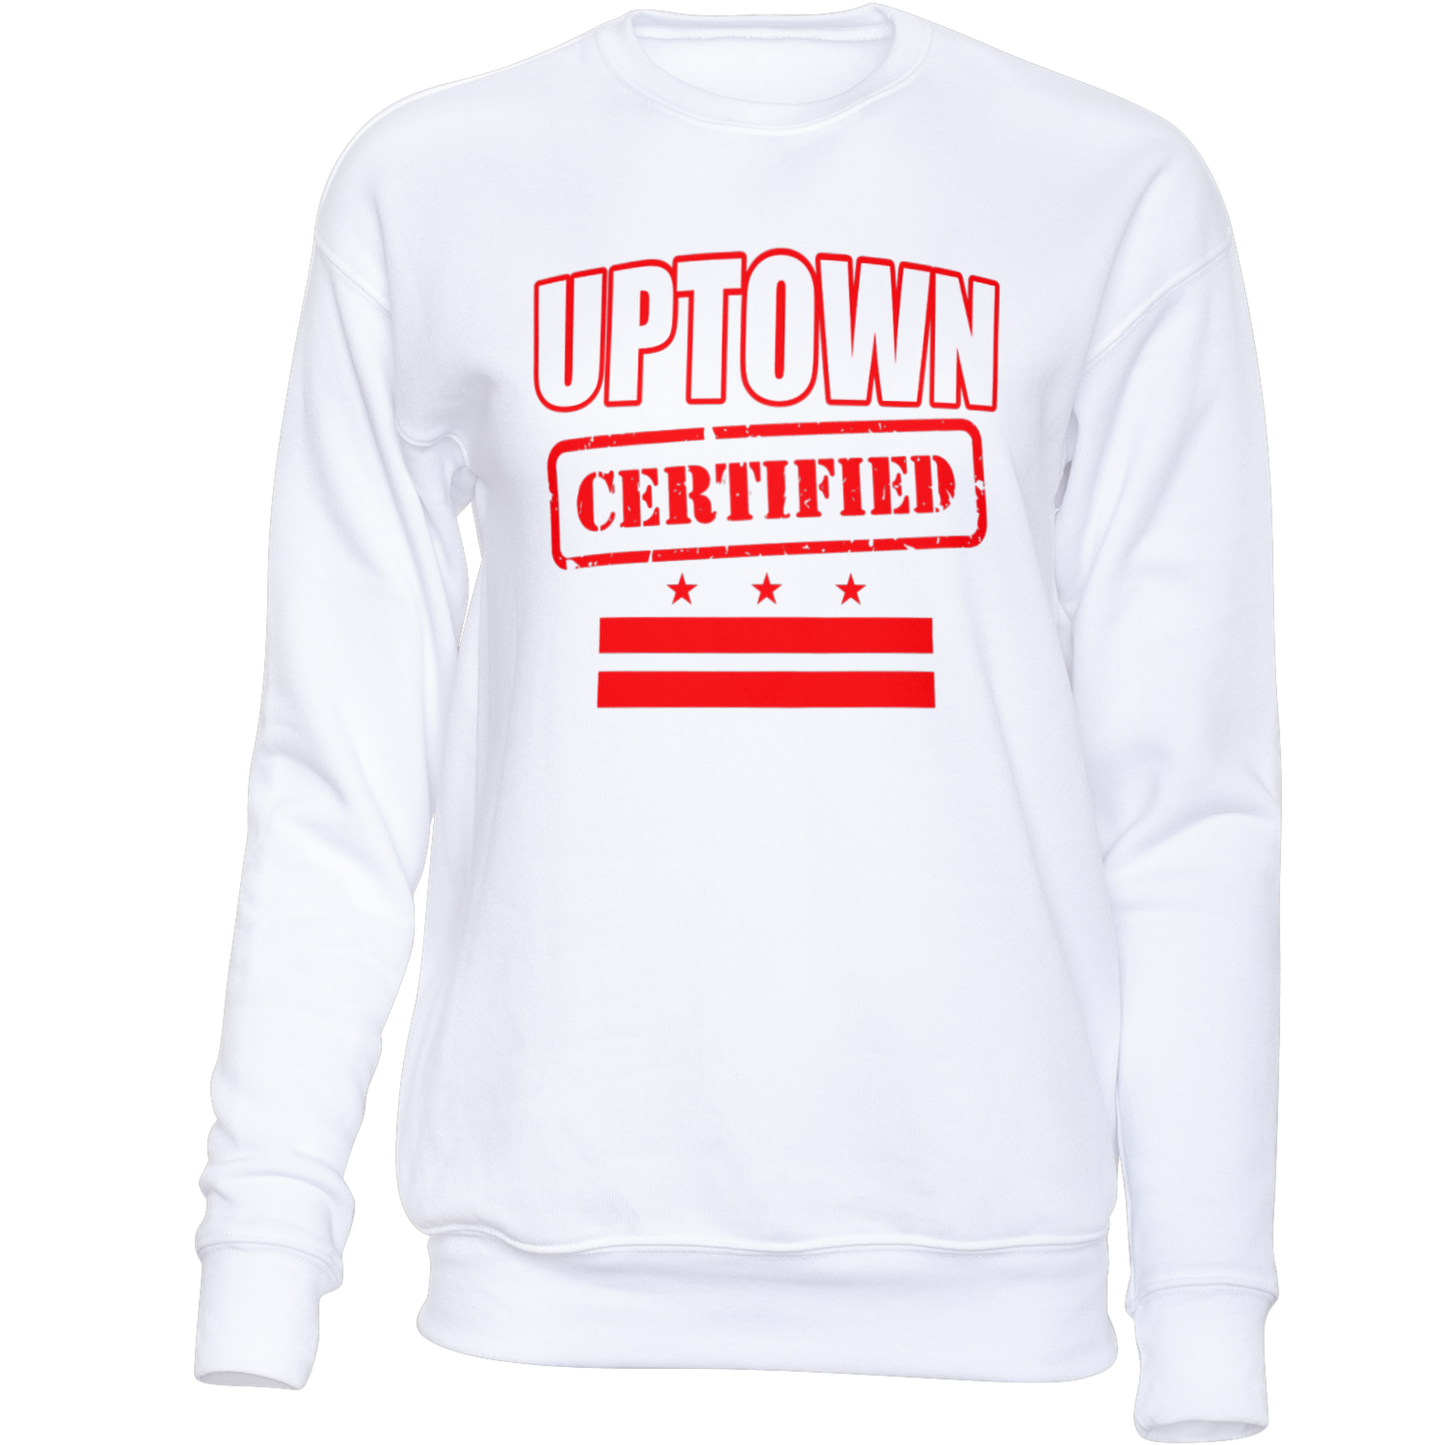 Uptown Certified